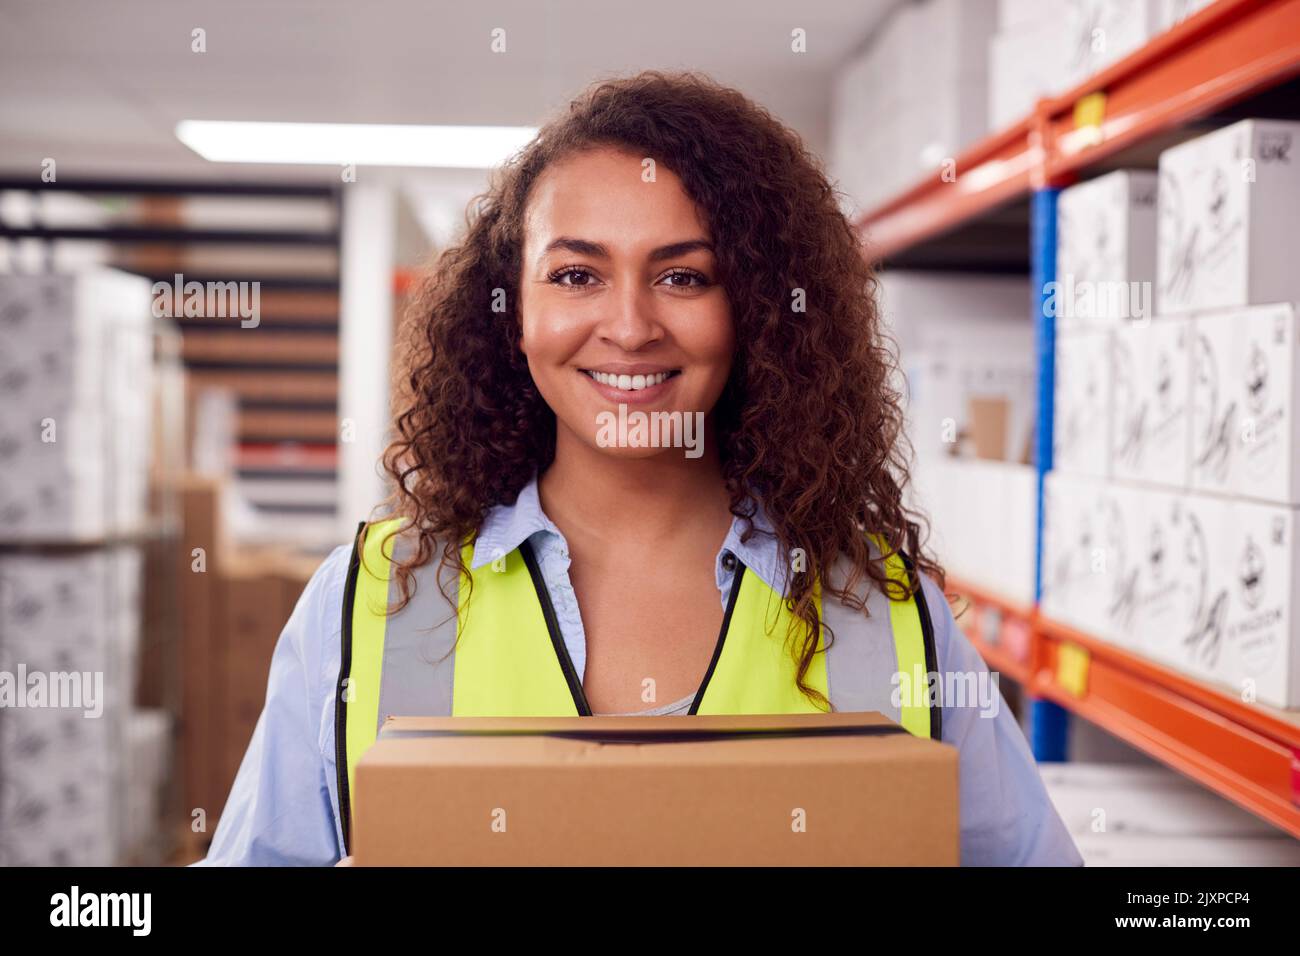 Portrait Of Female Worker Holding Box Inside Warehouse Stock Photo